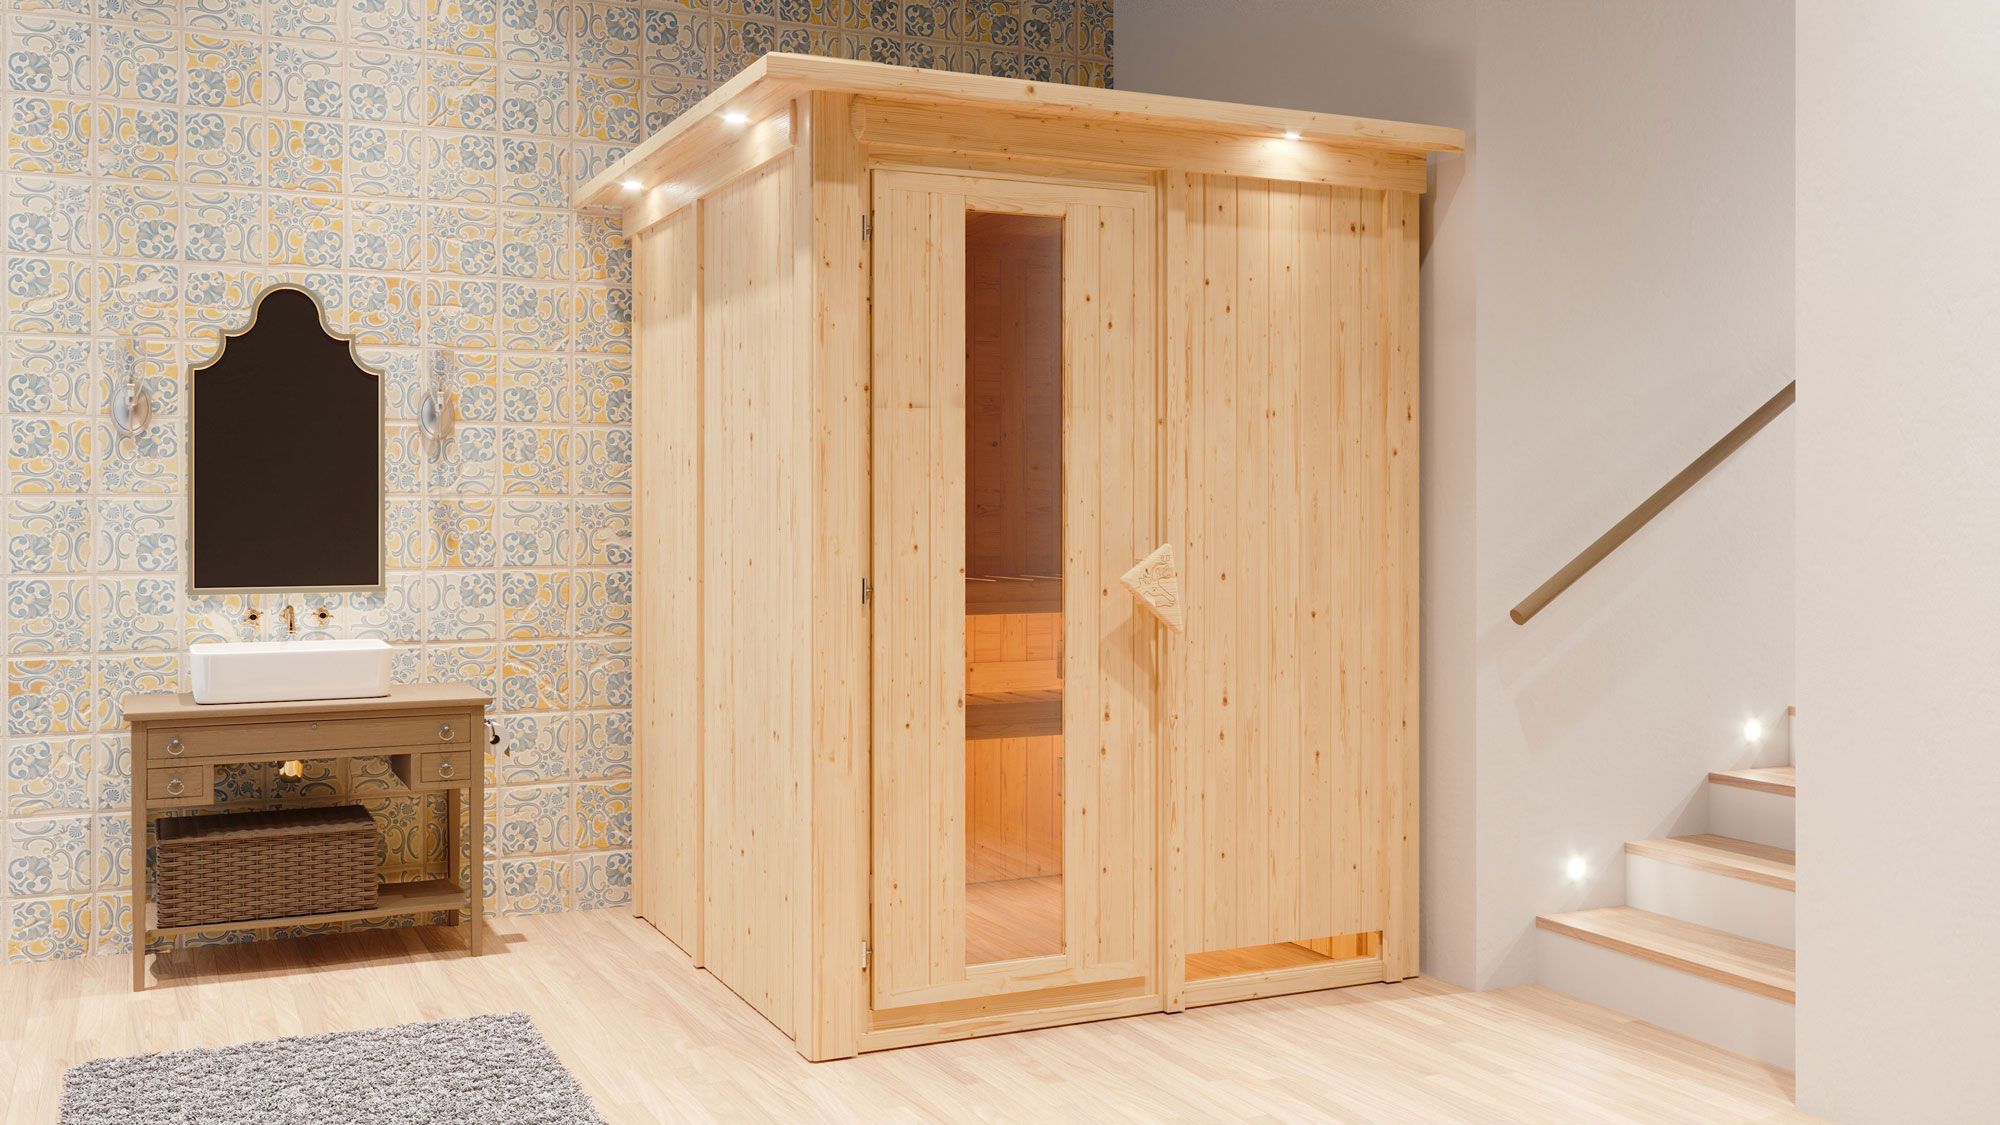 SET-sauna "Niilo" met energiebesparende deur en rand - kleur: naturel, 9 kW kachel - 165 x 165 x 202 cm (B x D x H)